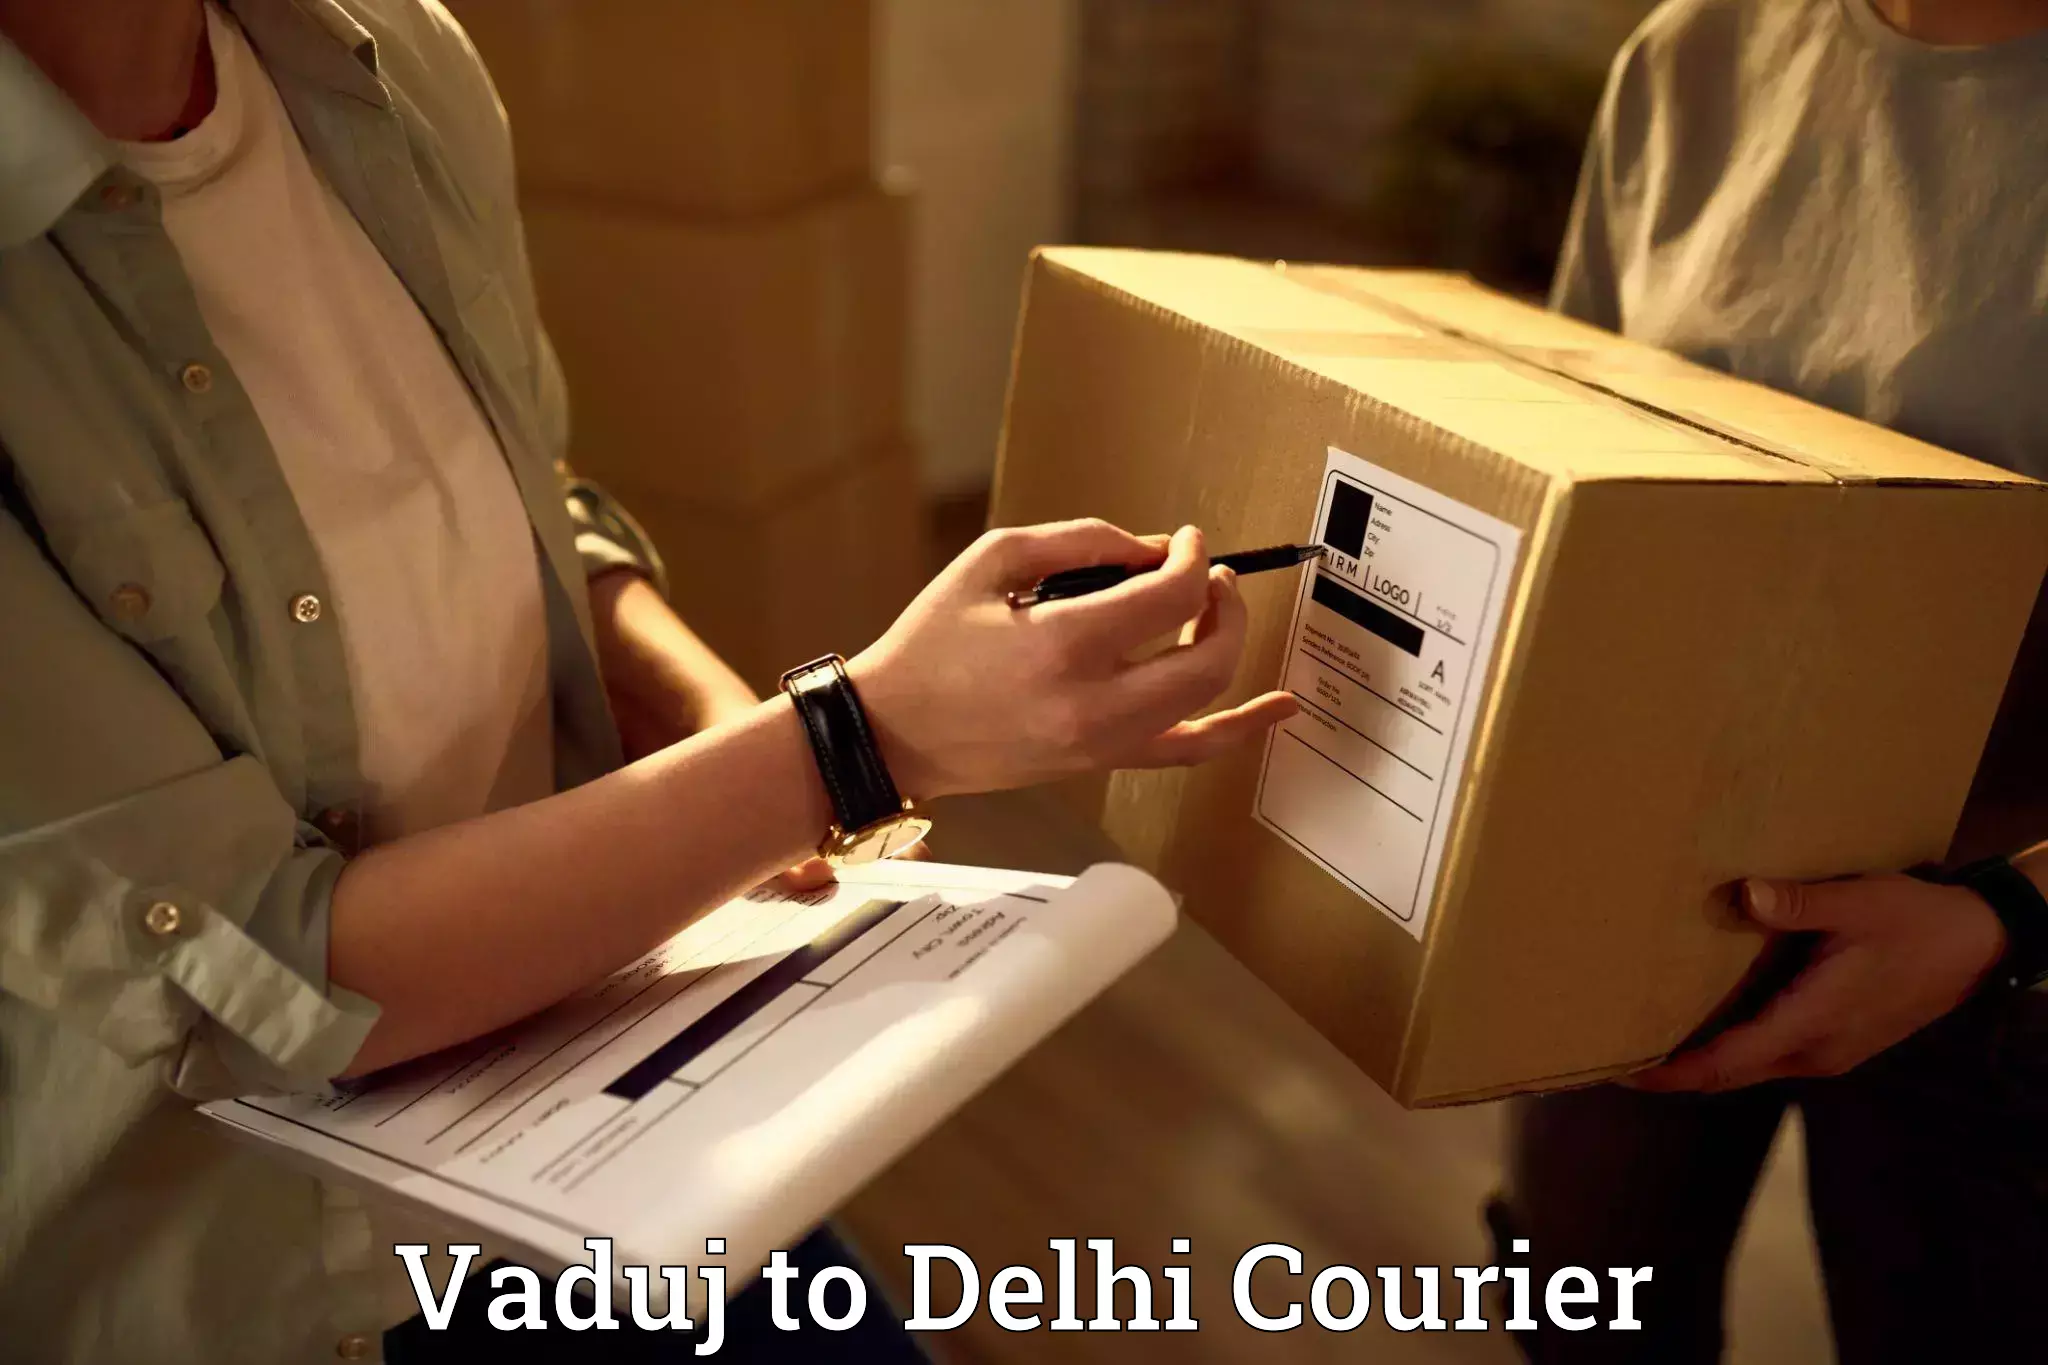 Professional furniture movers Vaduj to University of Delhi